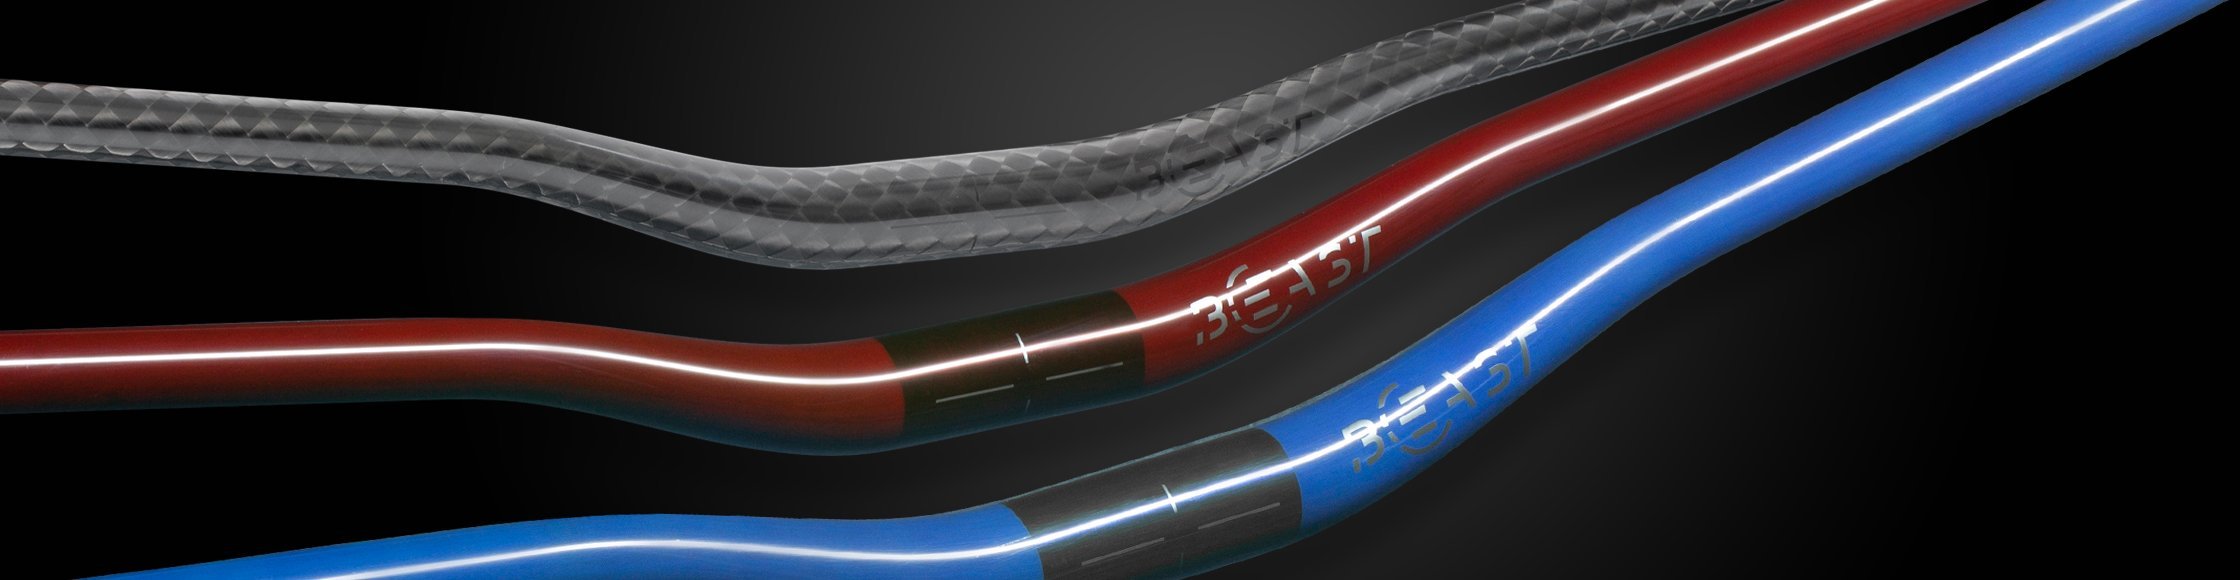 BEAST Components Carbon-Fahrradlenker in bunt: rot, blau, schwarz